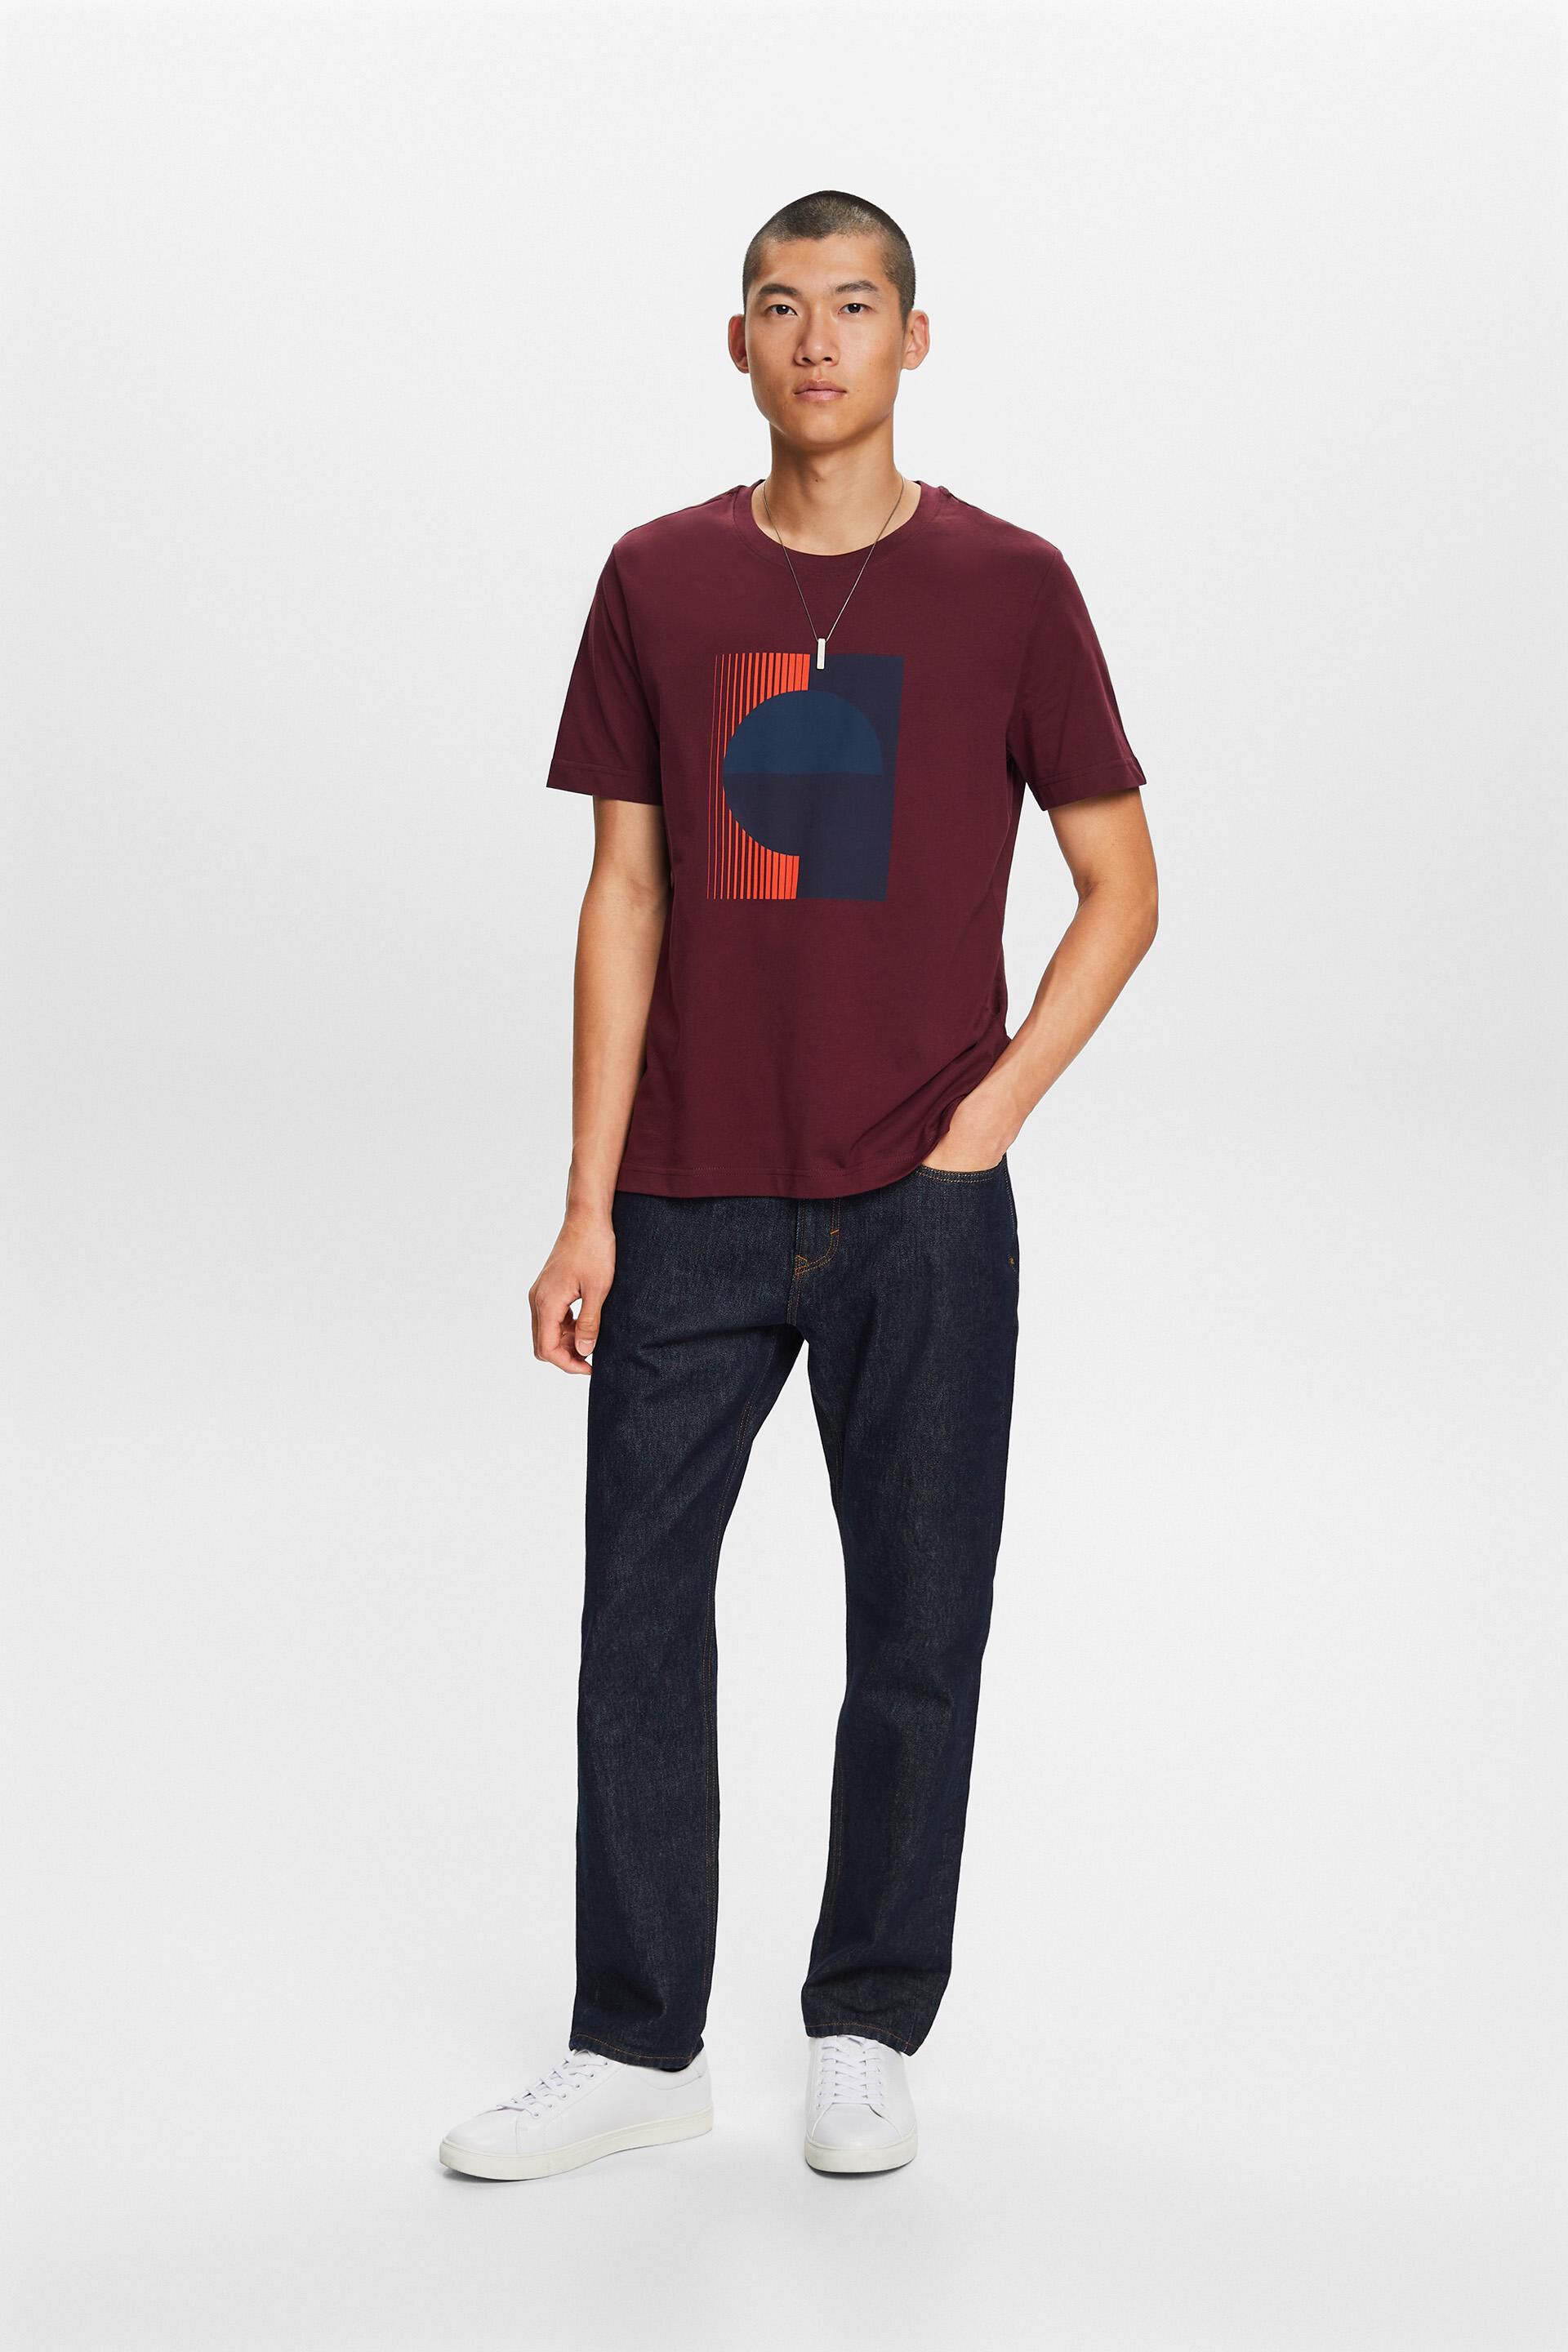 Esprit 100% with T-shirt Jersey print, cotton